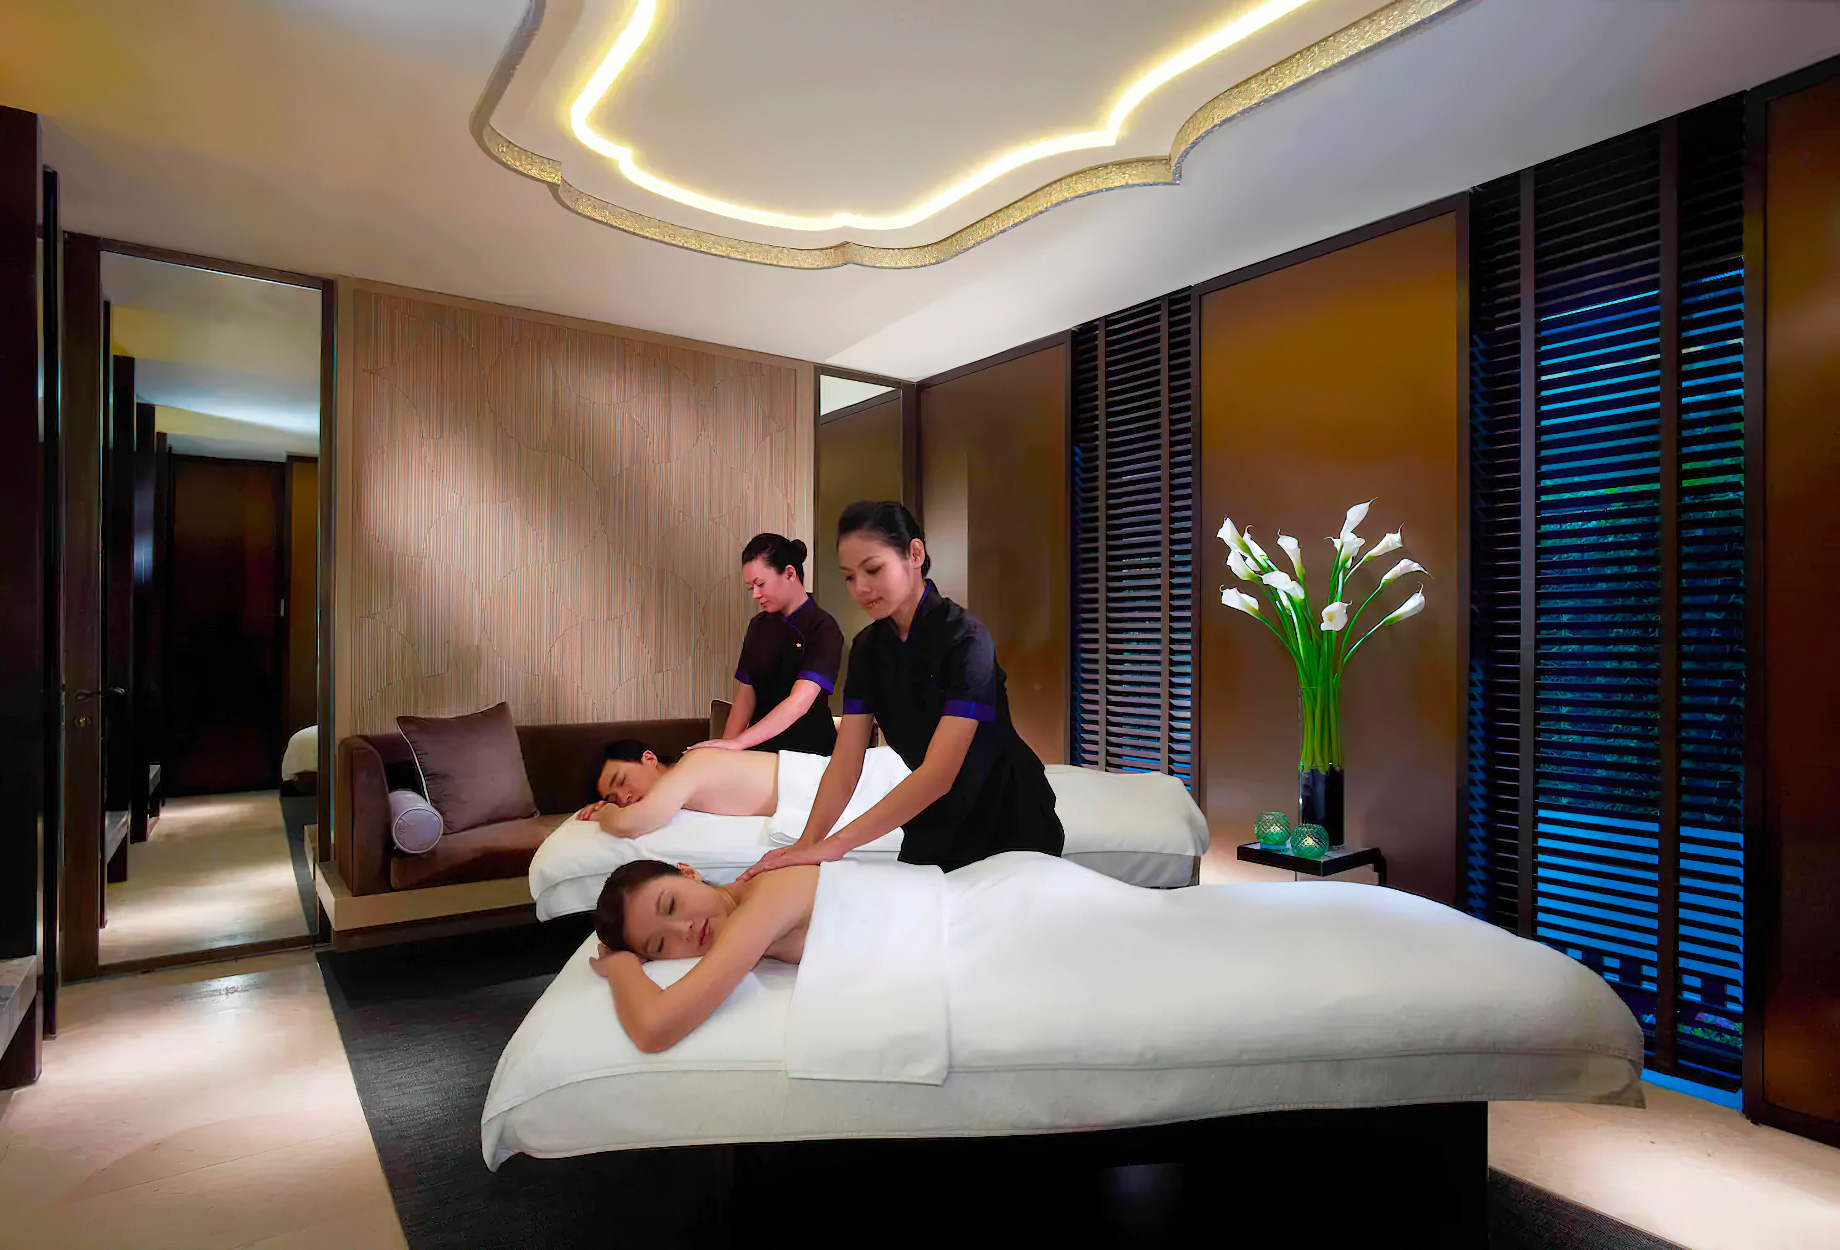 Mandarin Oriental, Singapore Hotel – Singapore – Spa Treatment Room